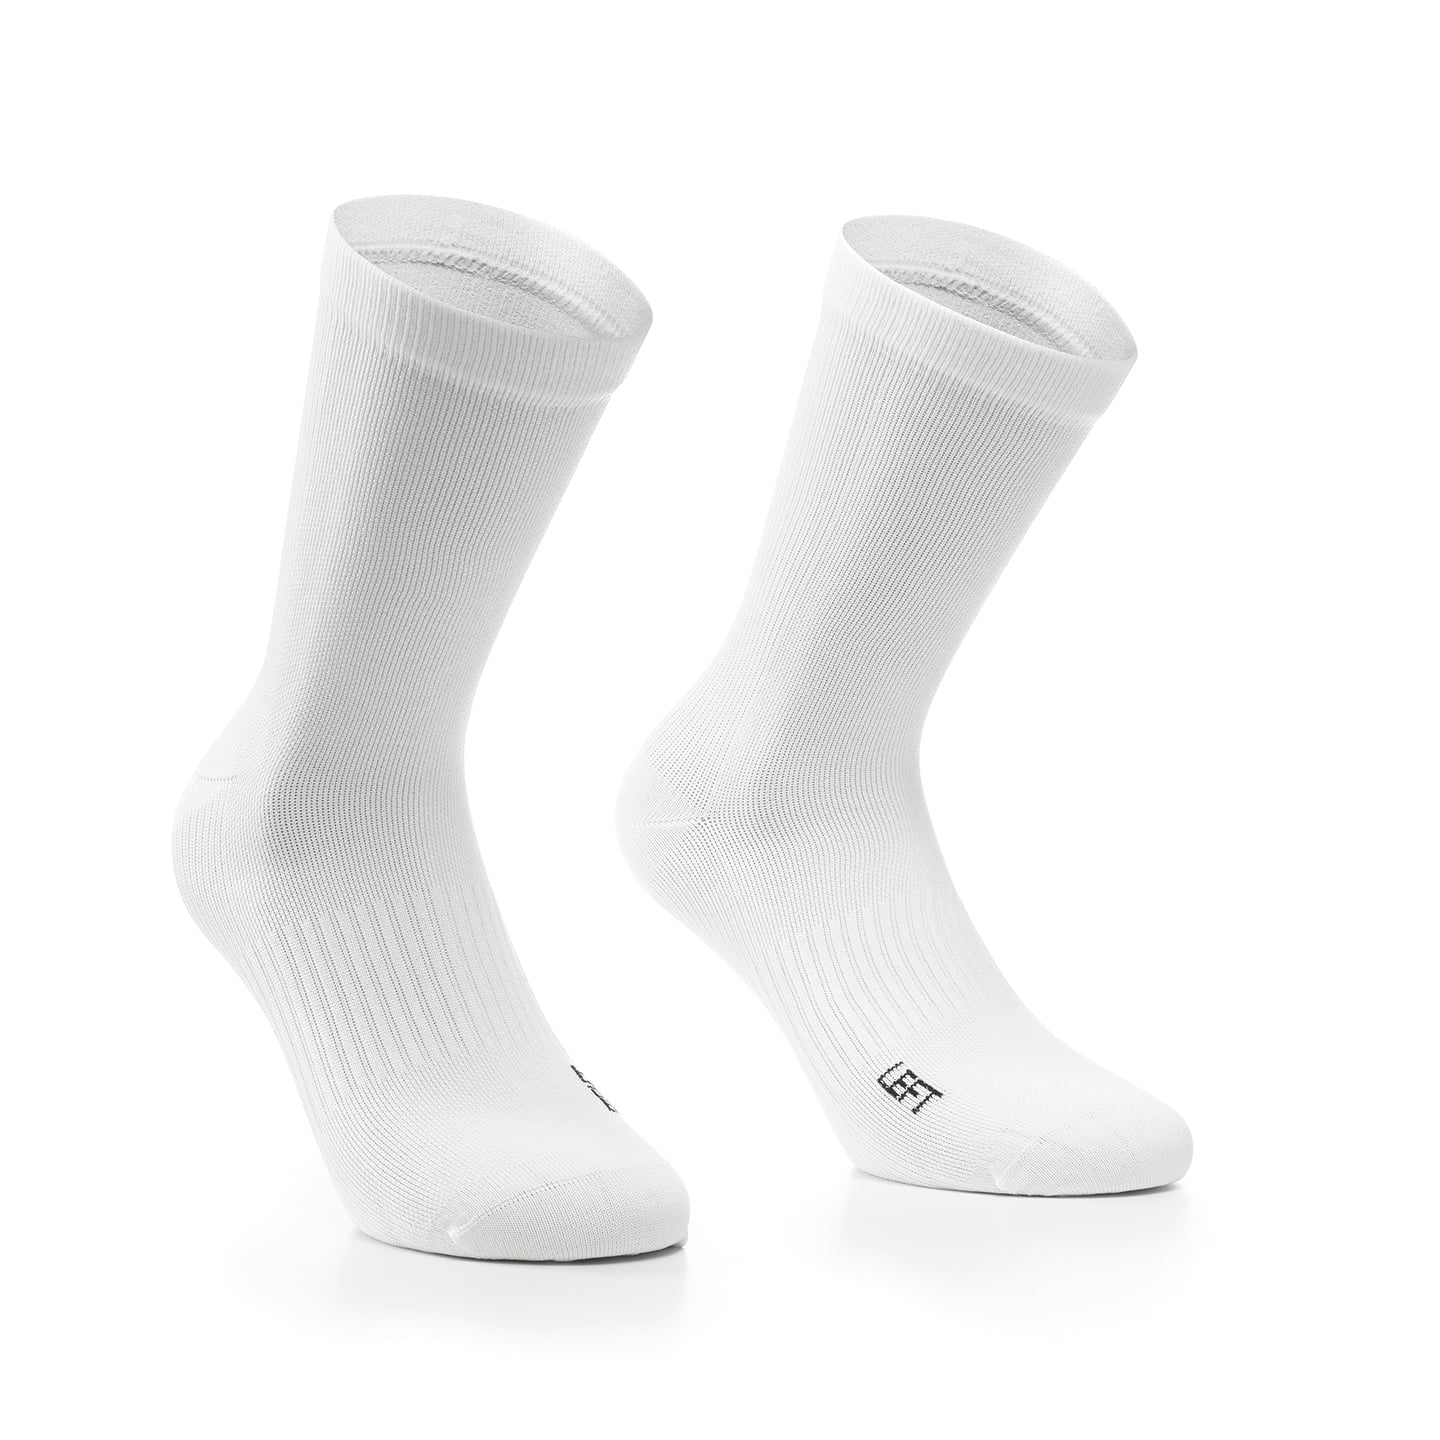 ASSOS Essence High Cycling Socks Cycling Socks, for men, size XS-S